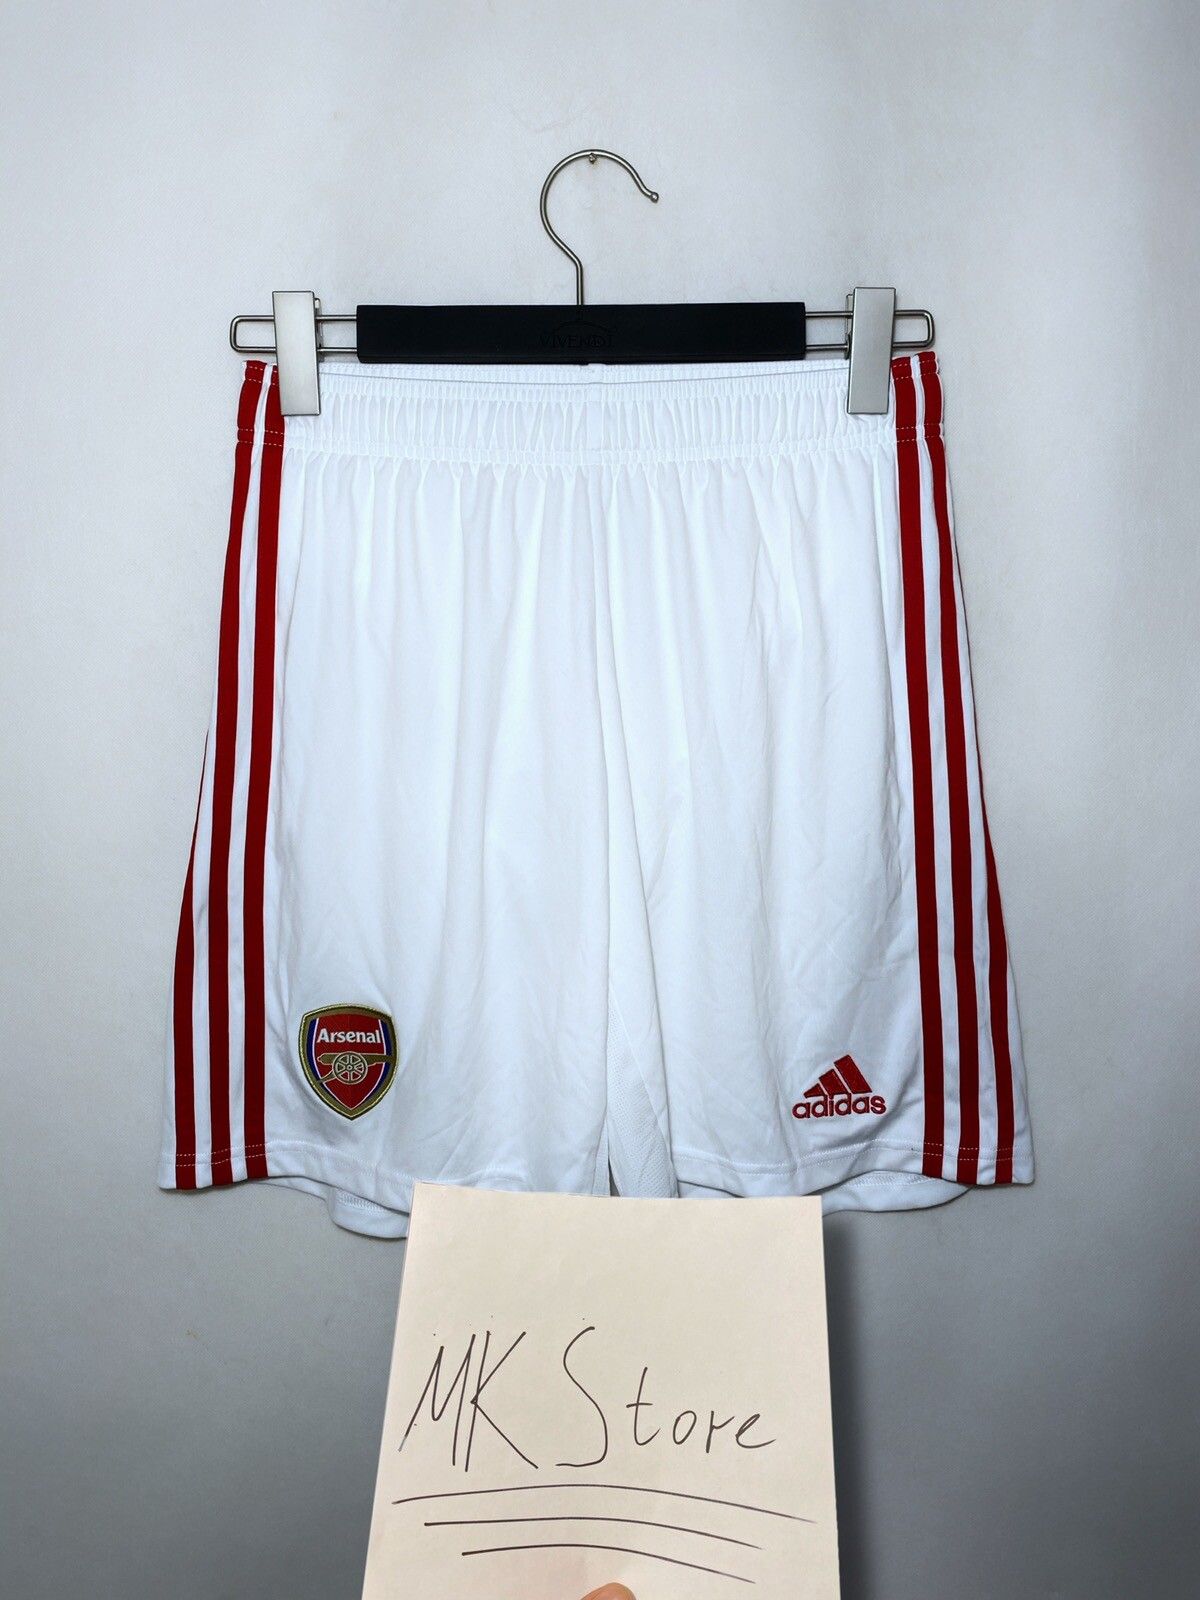 Adidas Adidas Shorts Football club Arsenal | Grailed